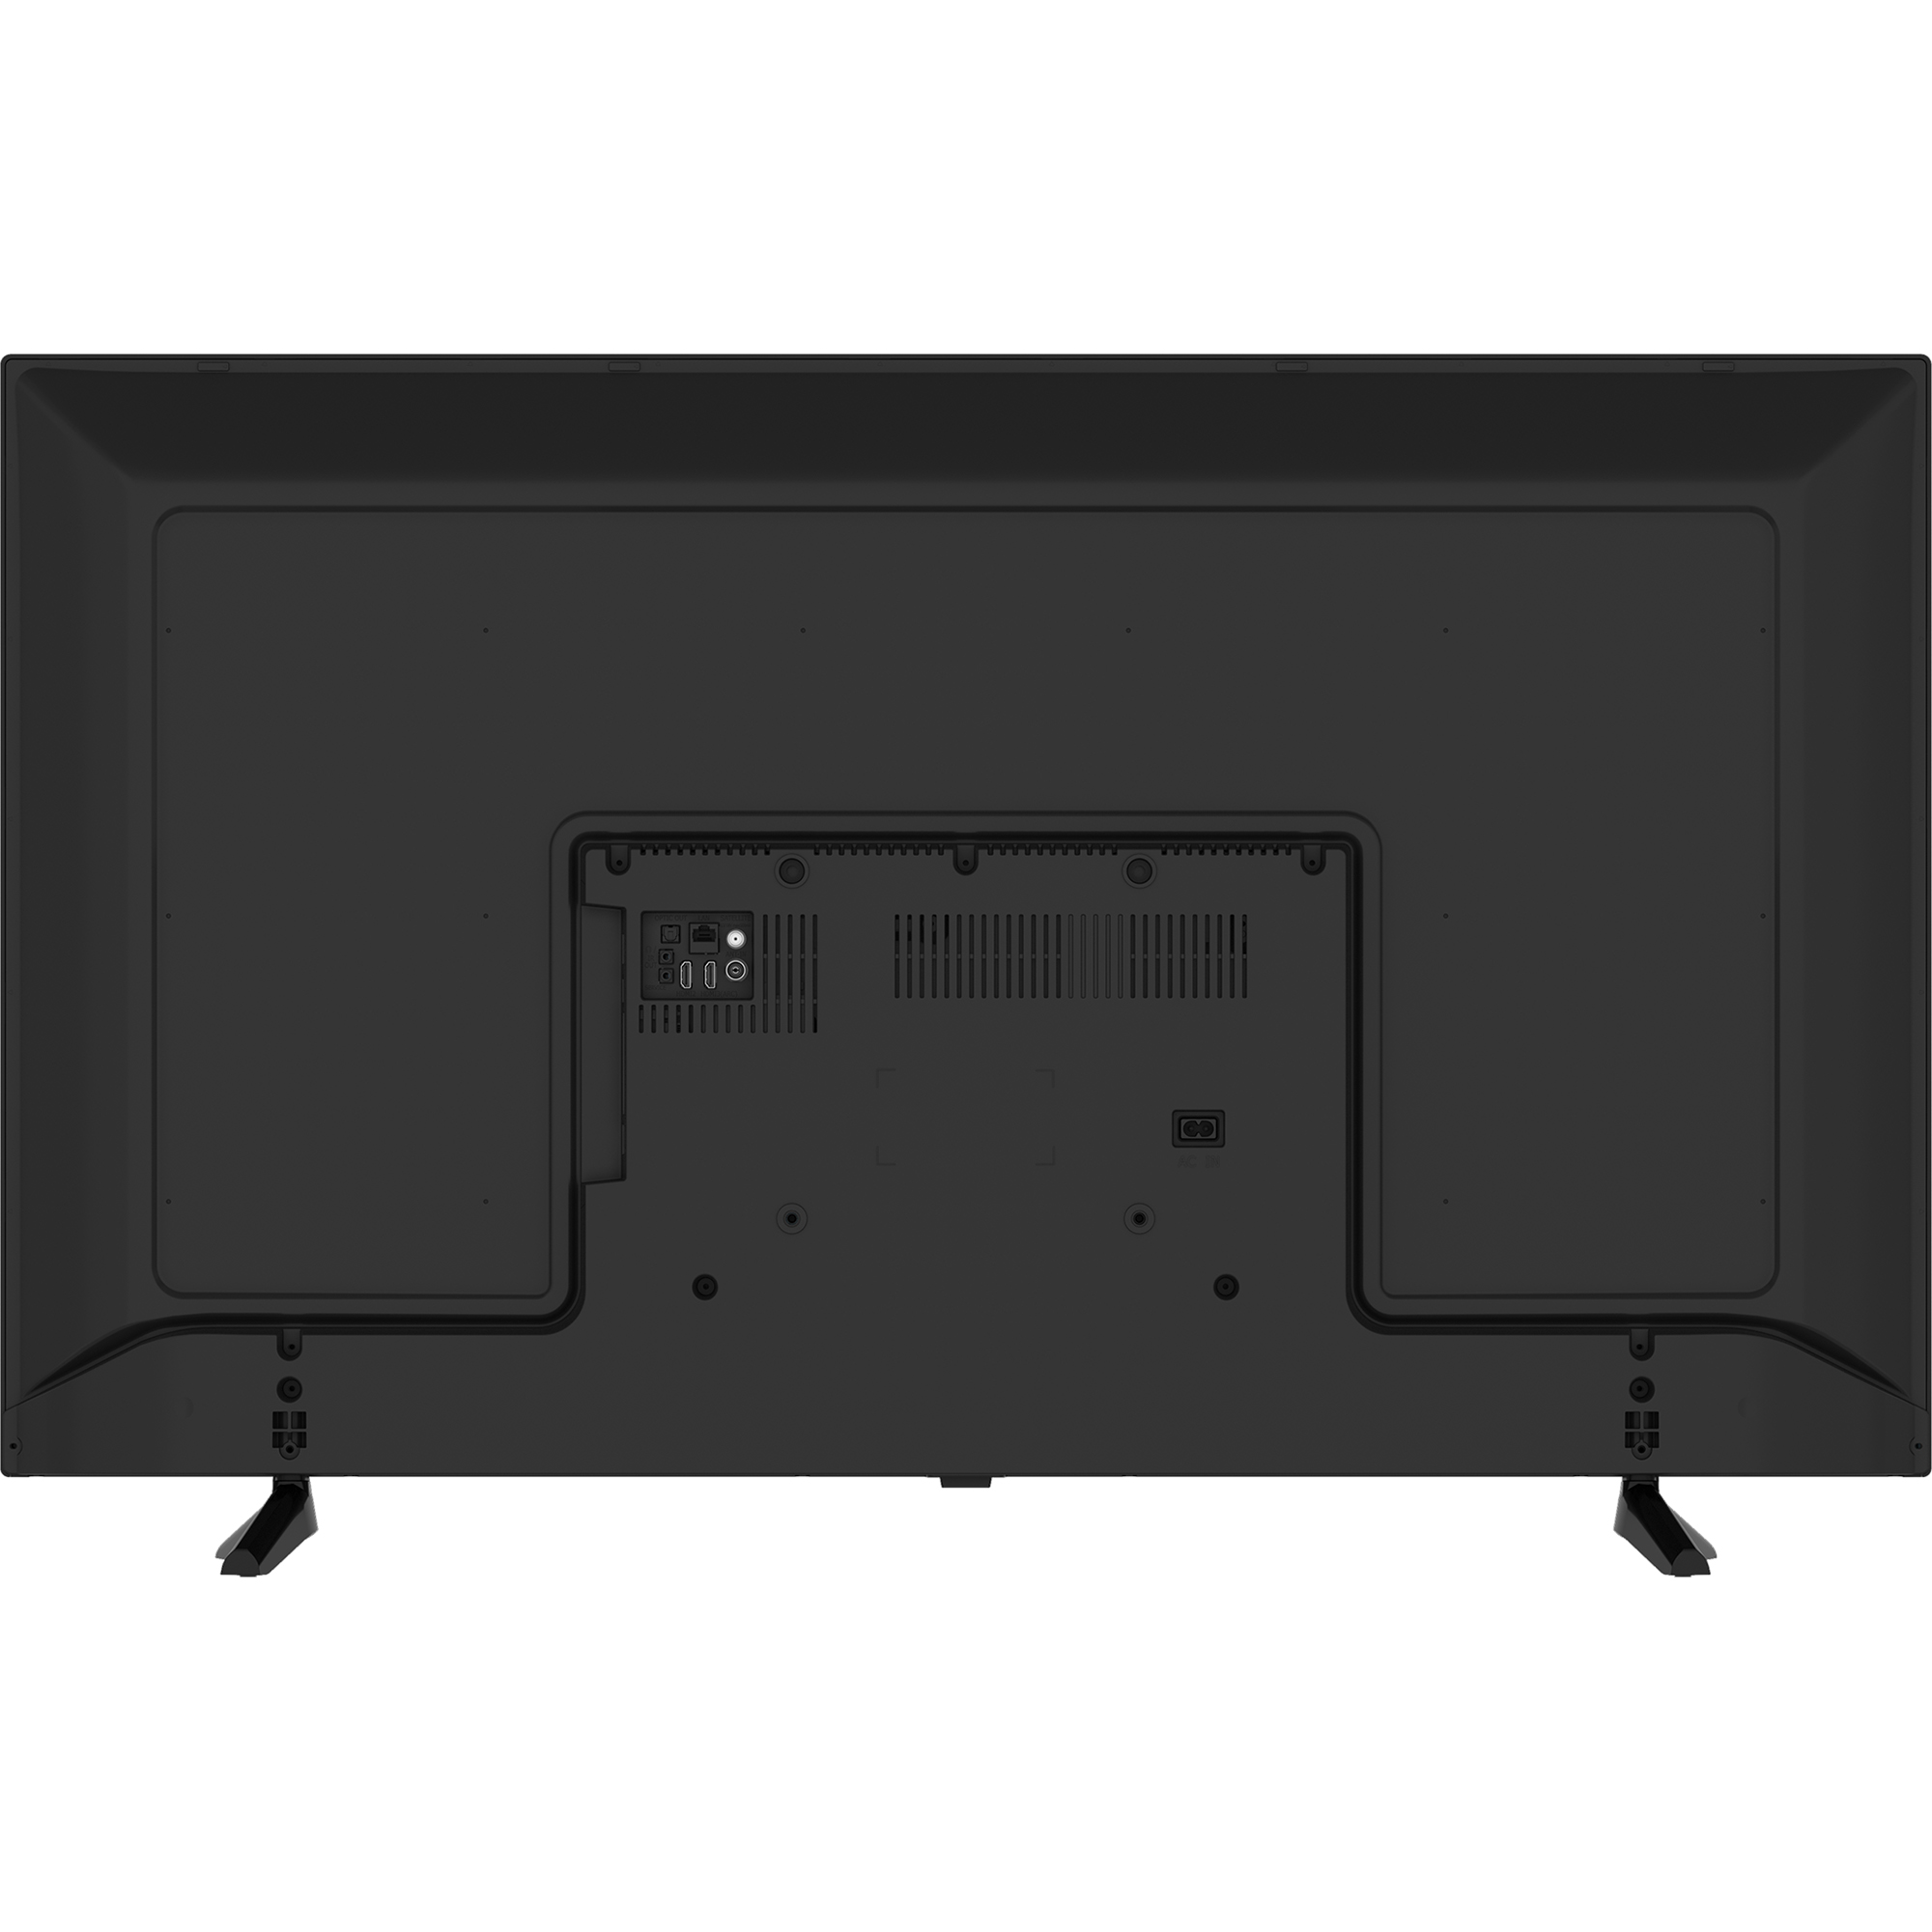 Телевизор Grundig 43GFU7800B, цвет черный - фото 6